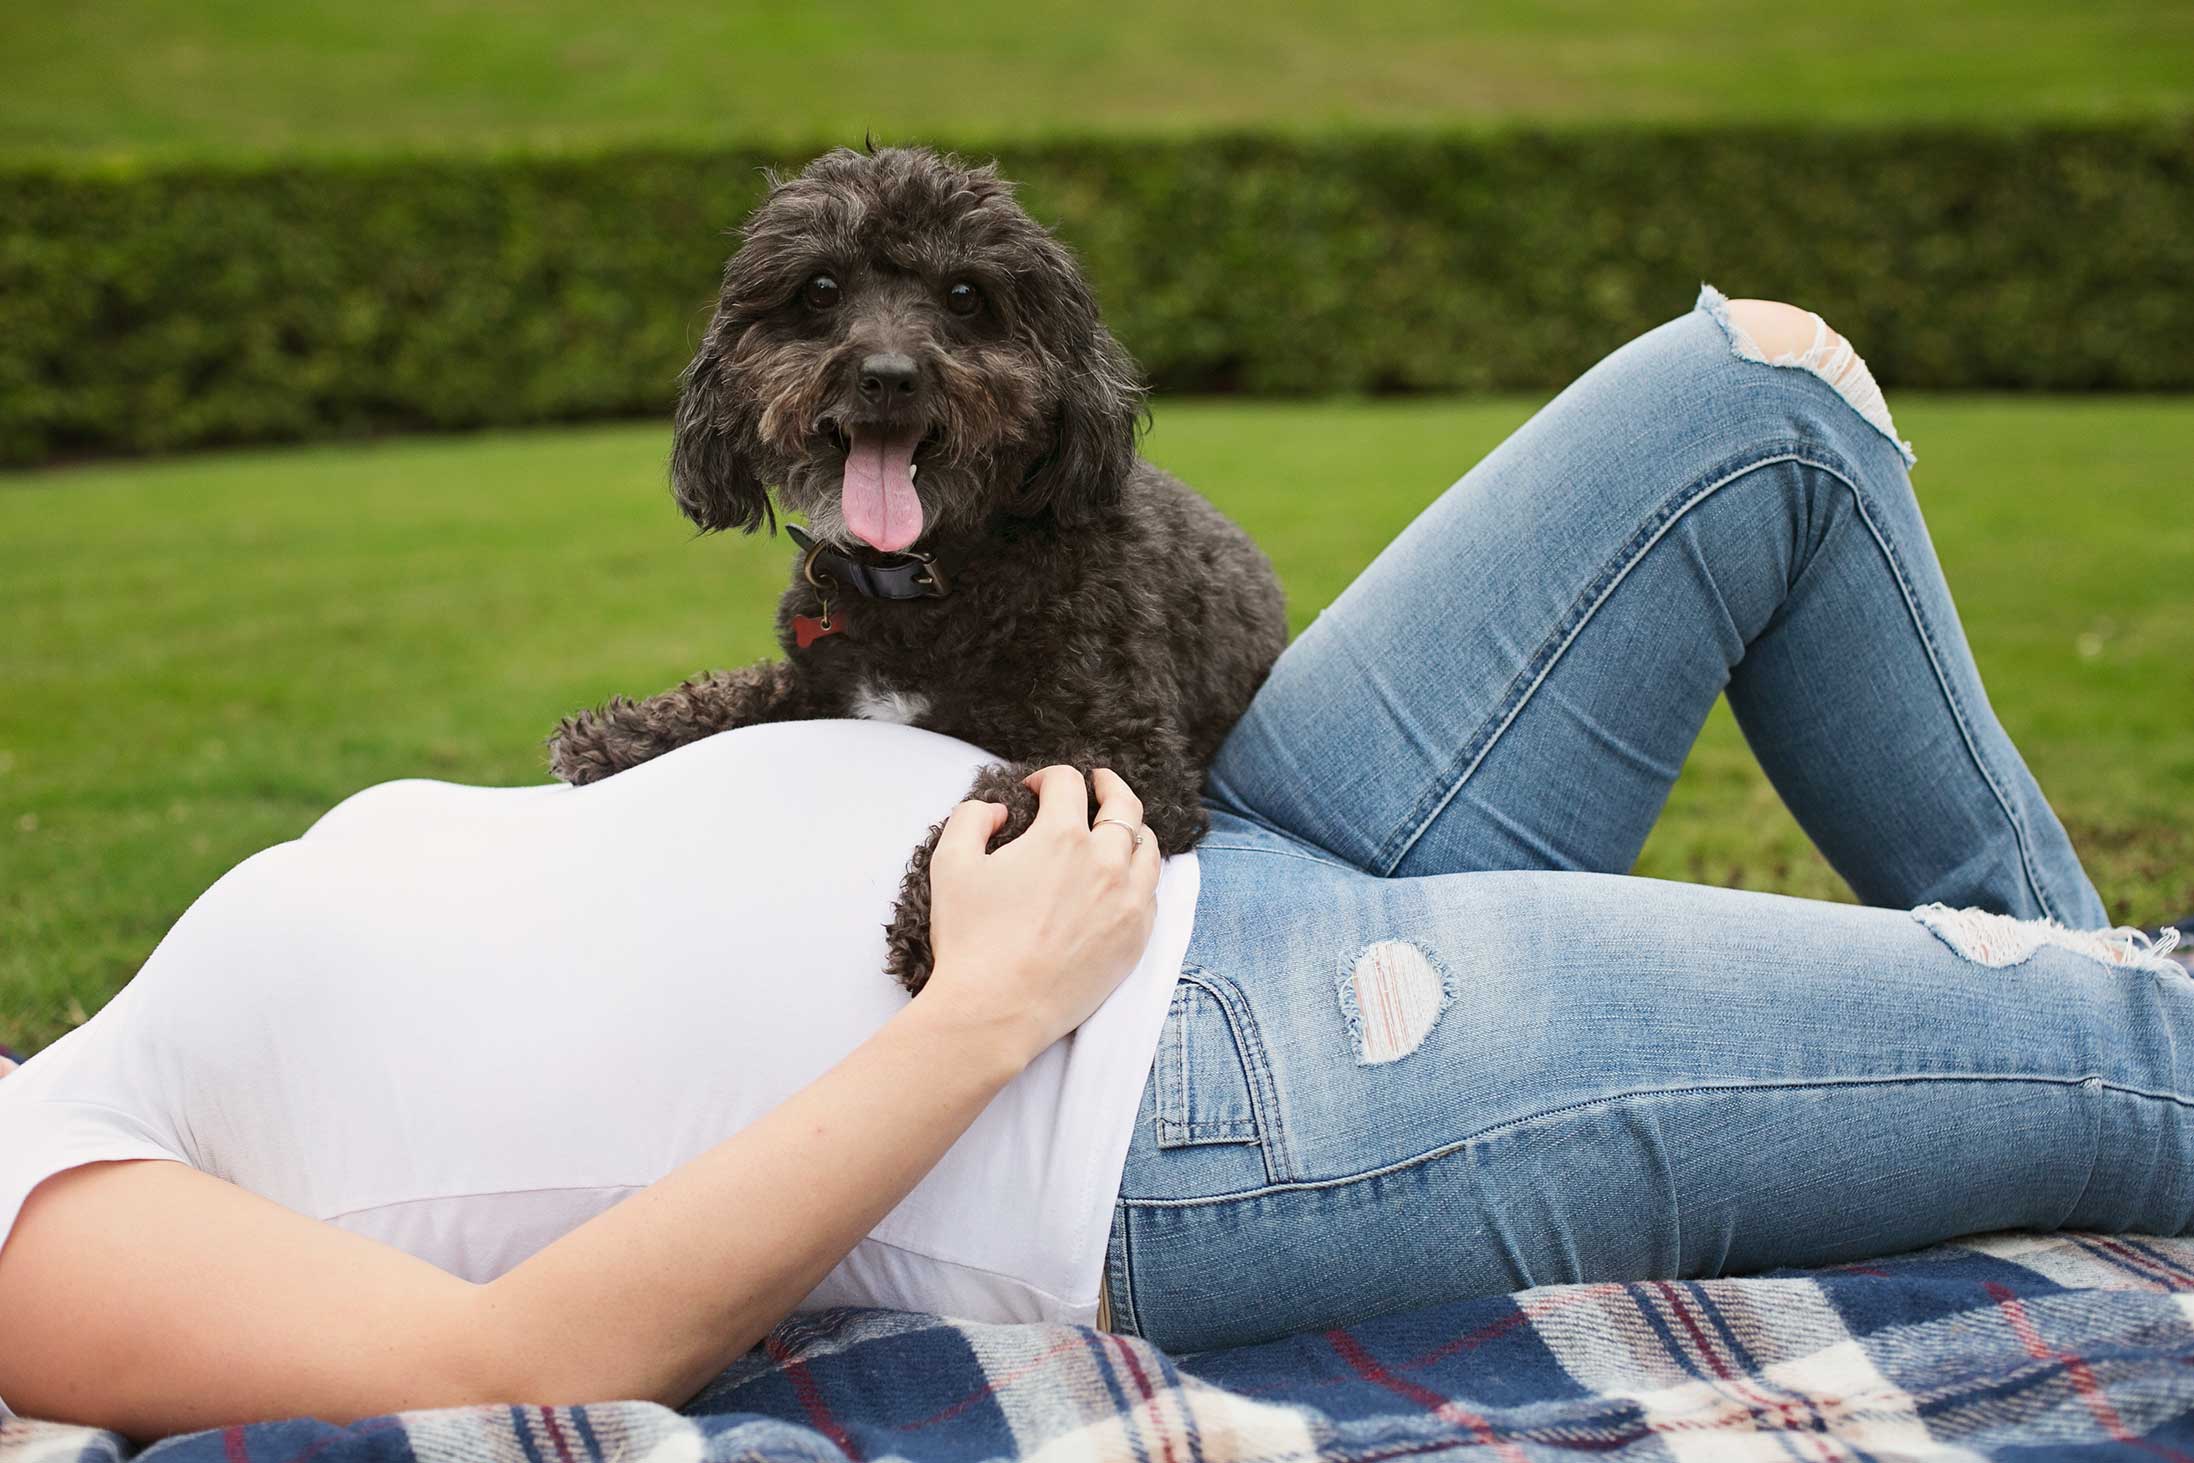 dog-pet-maternity-belly-park-grass